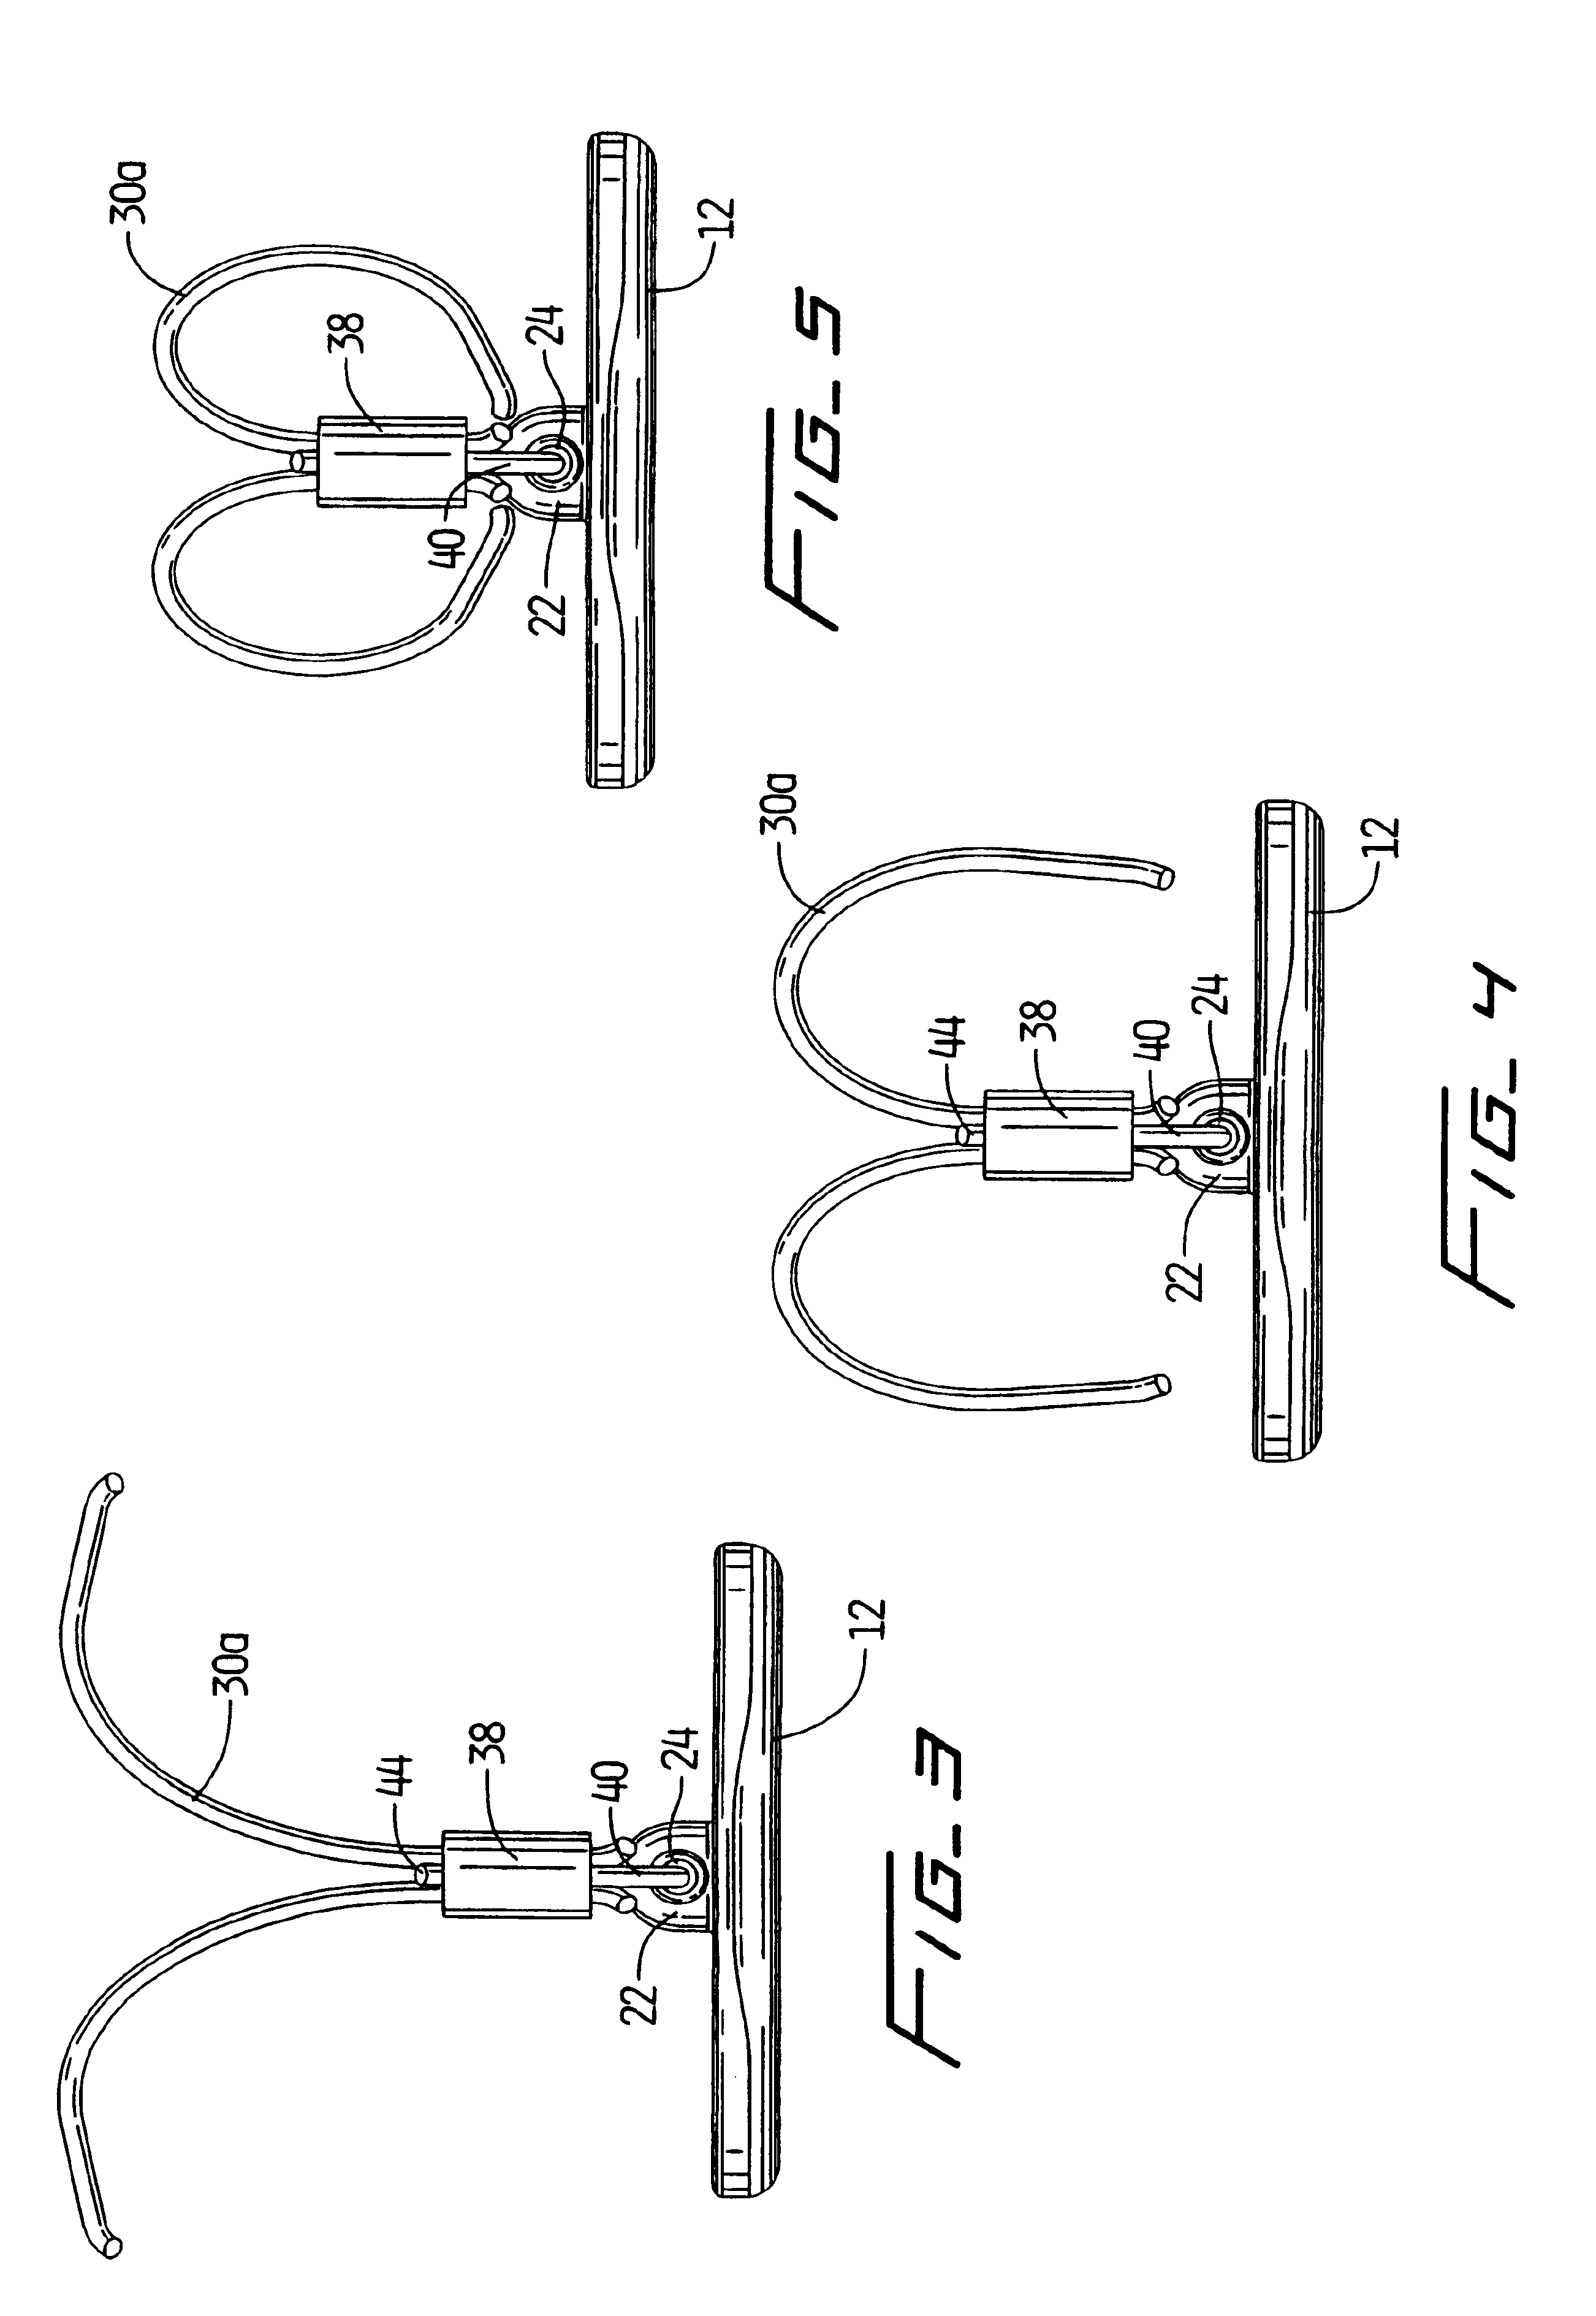 Injection method for locating vessel lumen